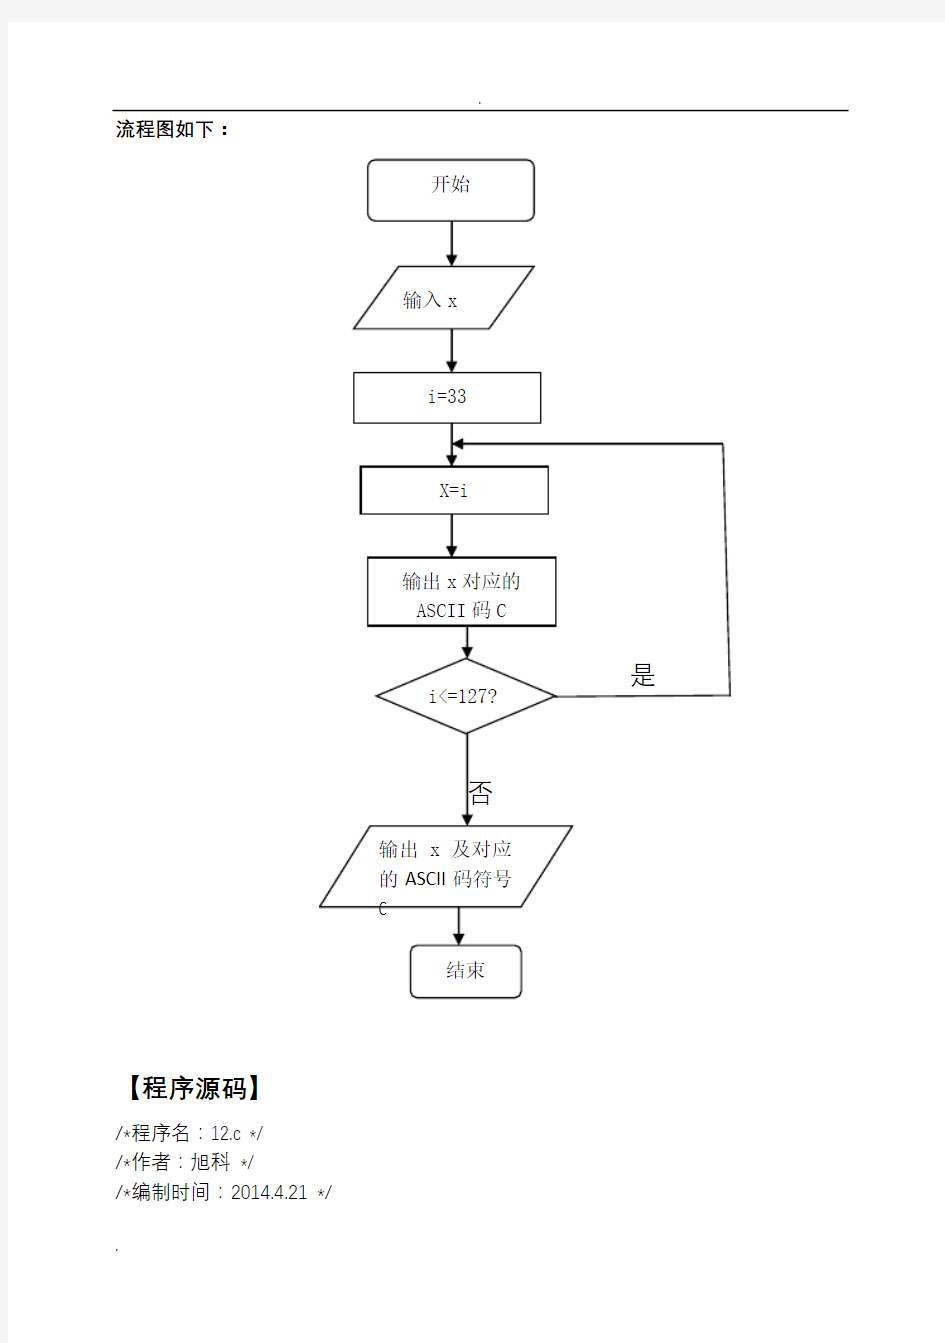 C循环结构程序设计报告